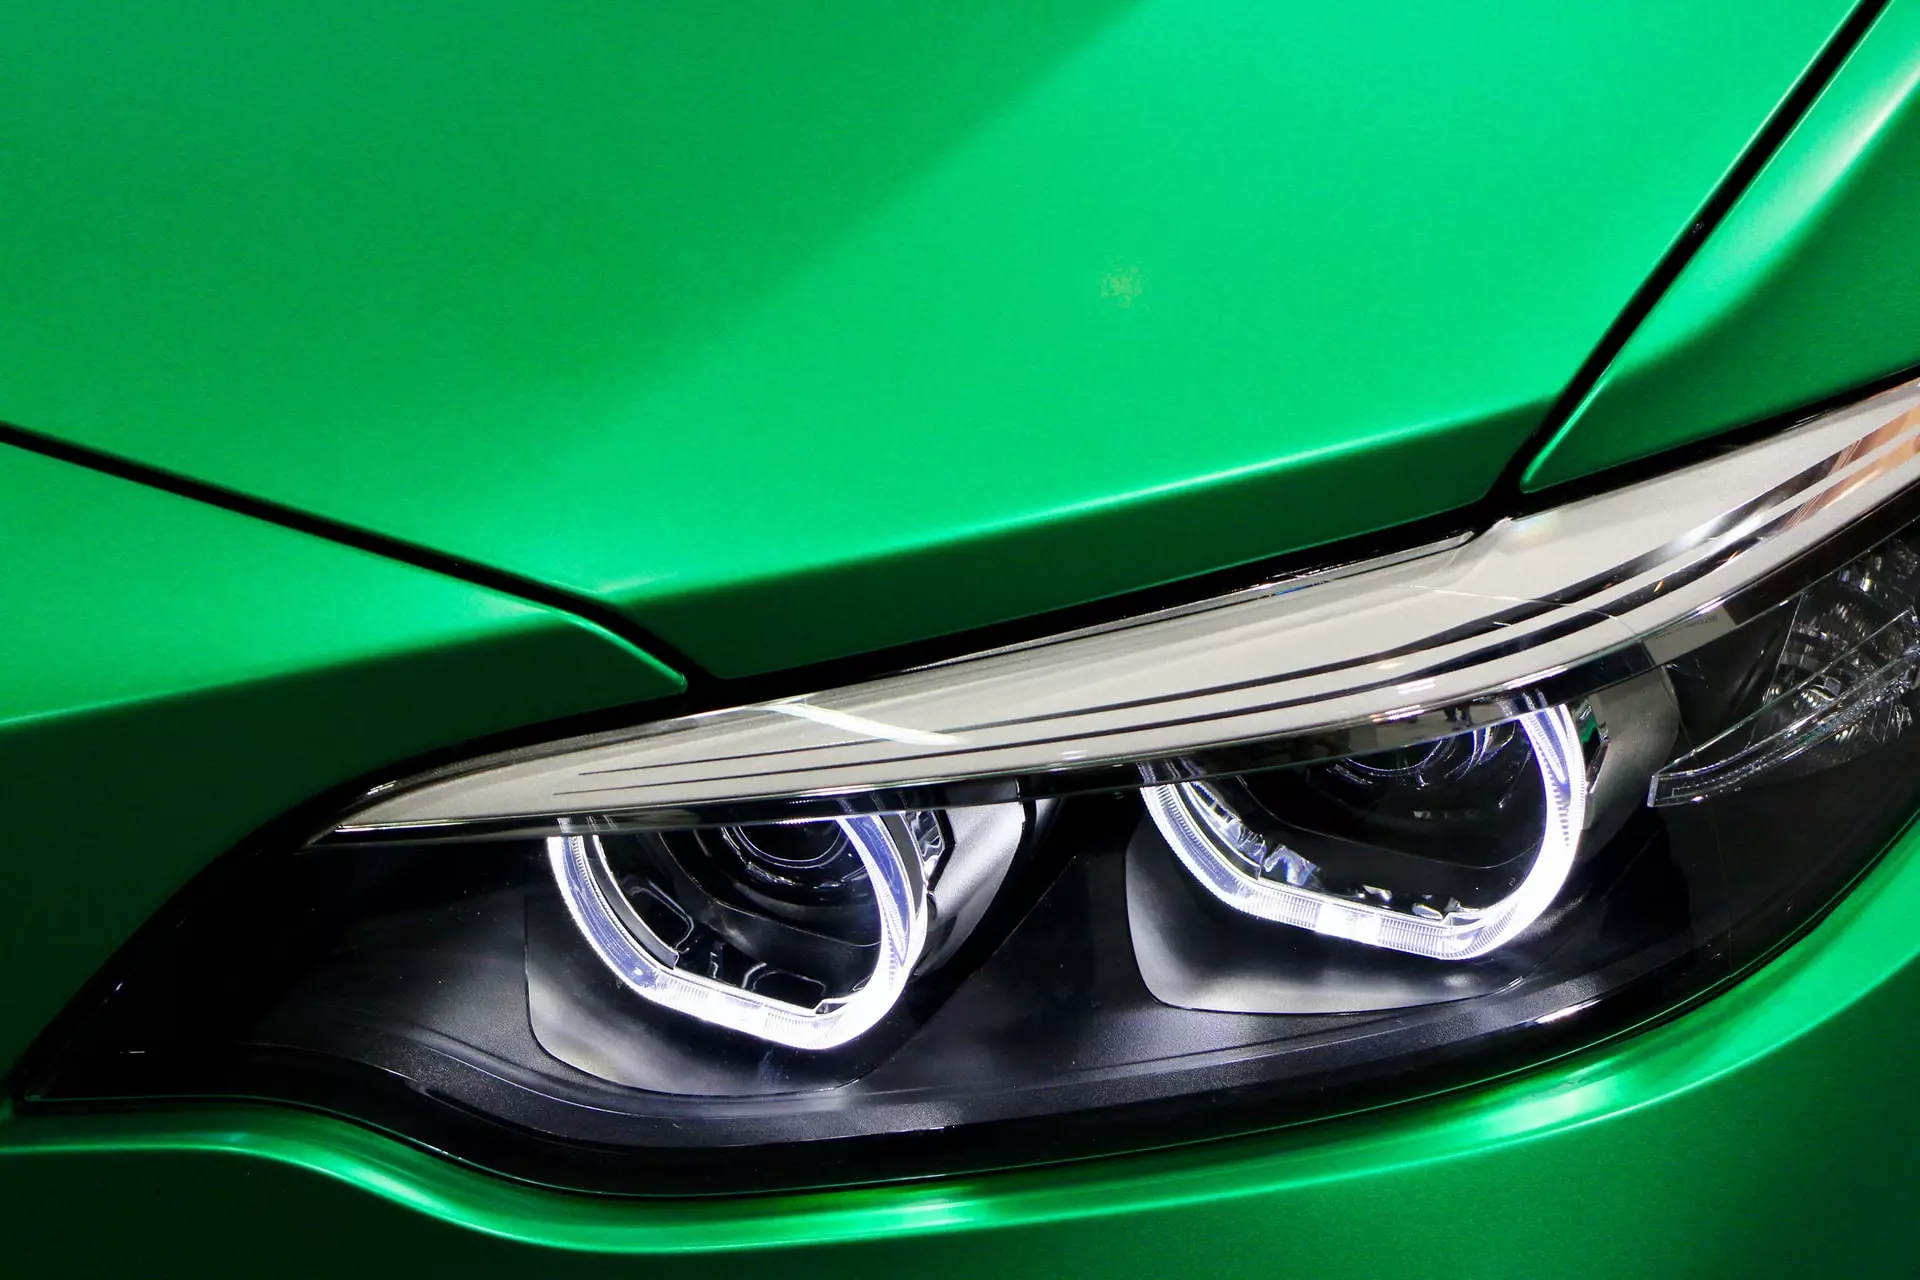 Green car's headlight